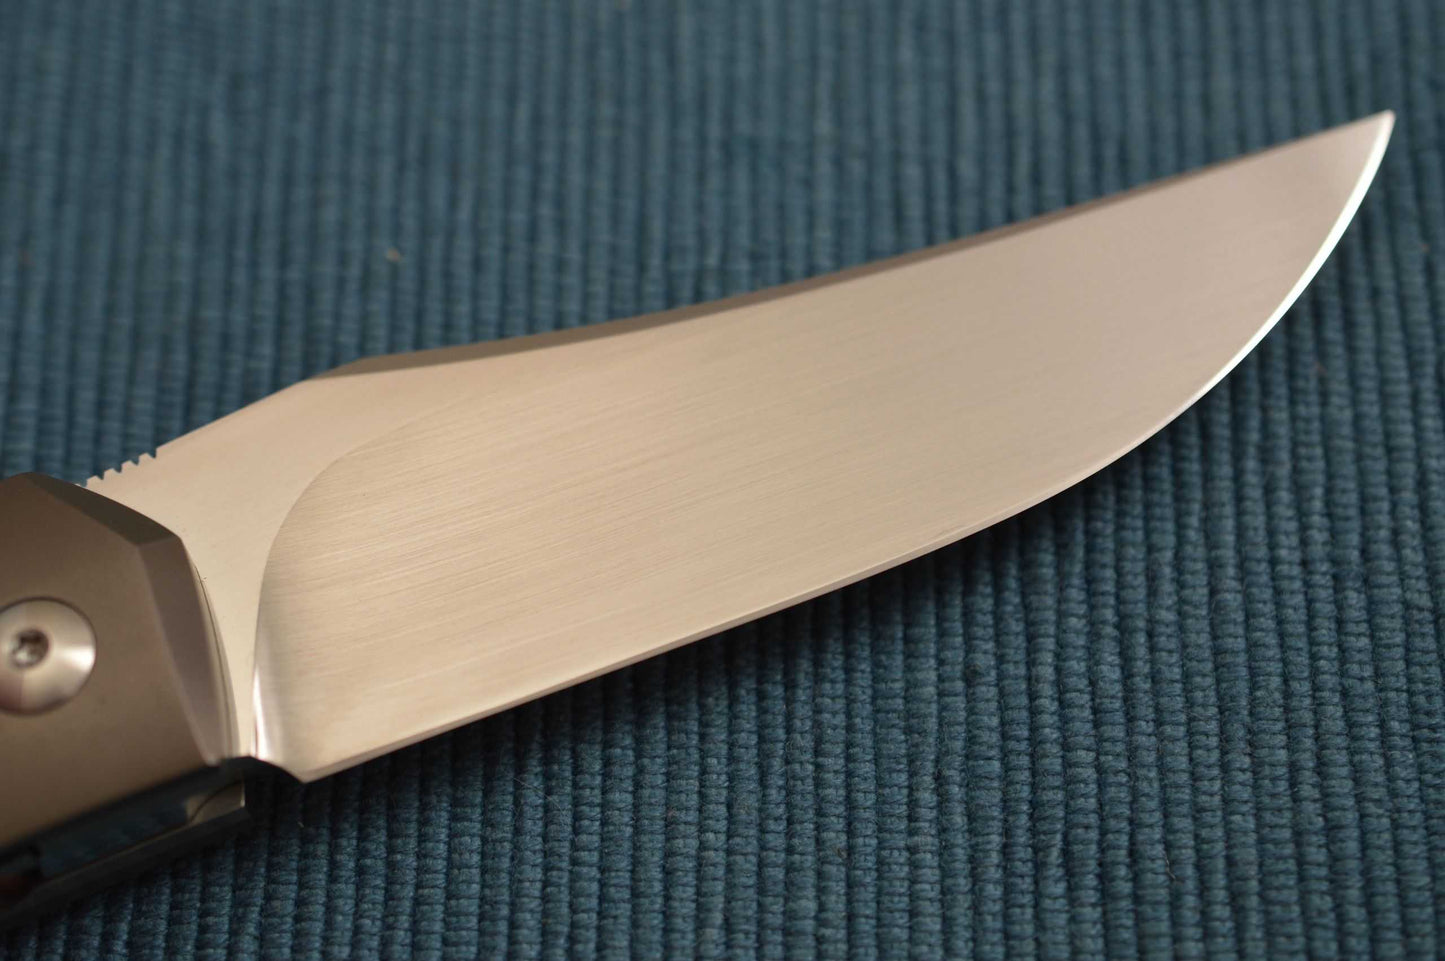 Maxime Belzunce "STAN" Liner-Lock Front Flipper Knife (SOLD)